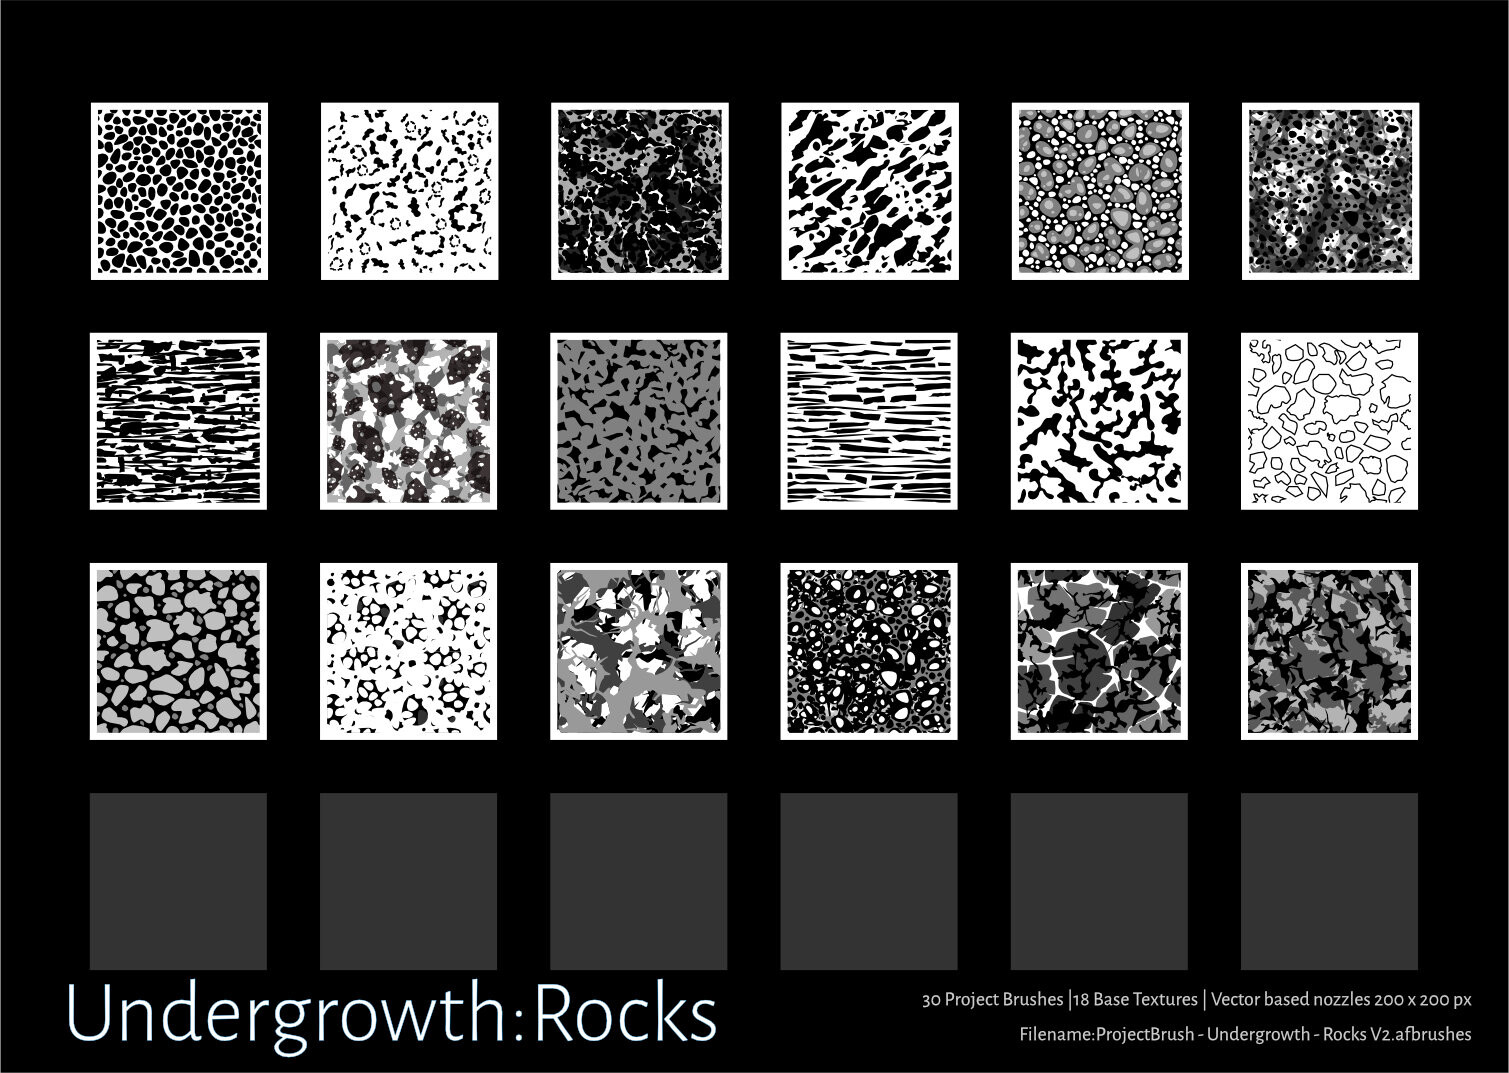 Undergrowth Rocks
18 Base Textures